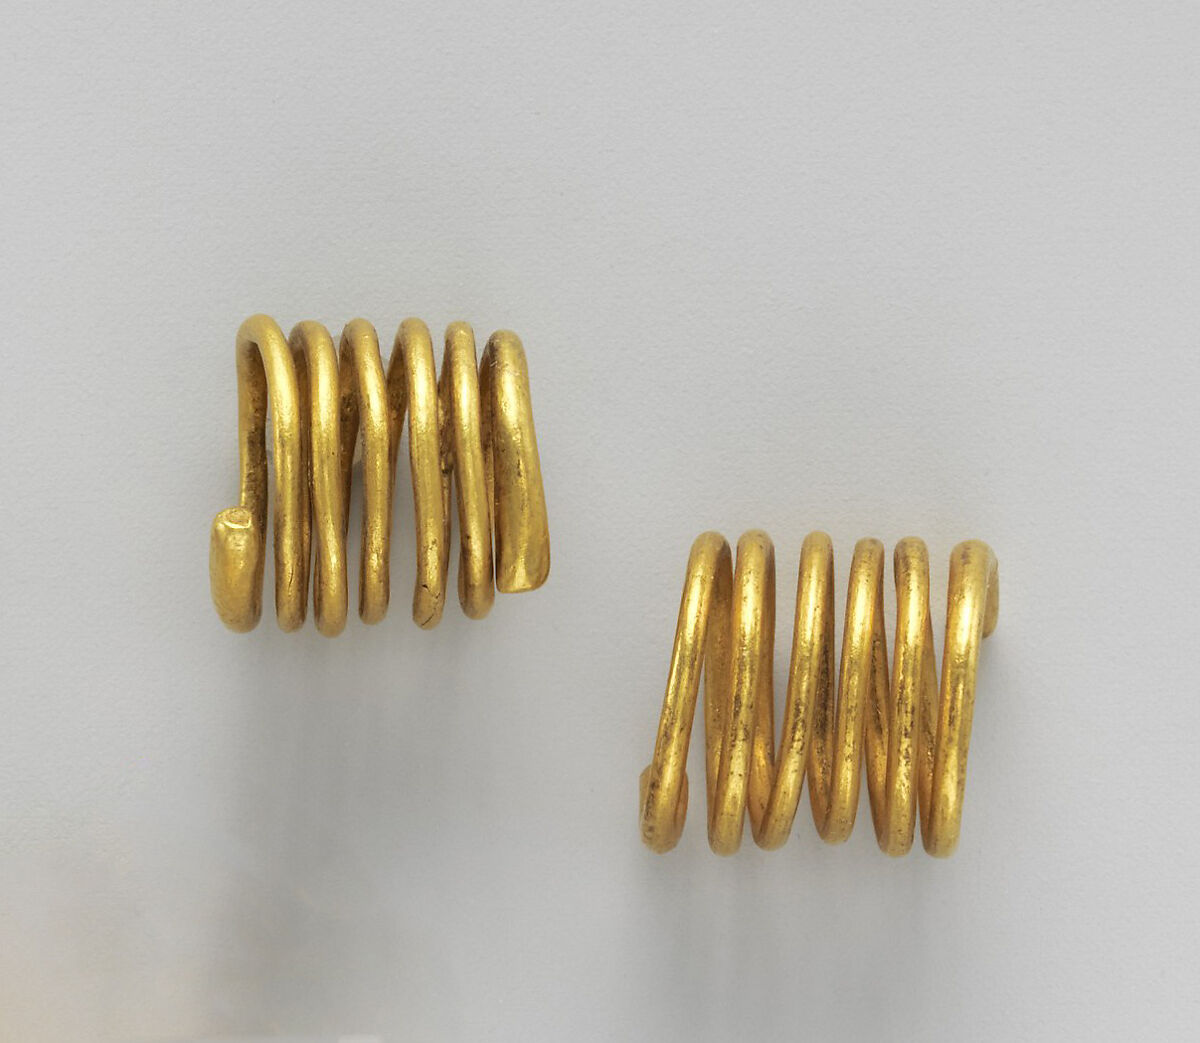 Pair of gold spirals | Etruscan | Archaic | The Metropolitan Museum of Art